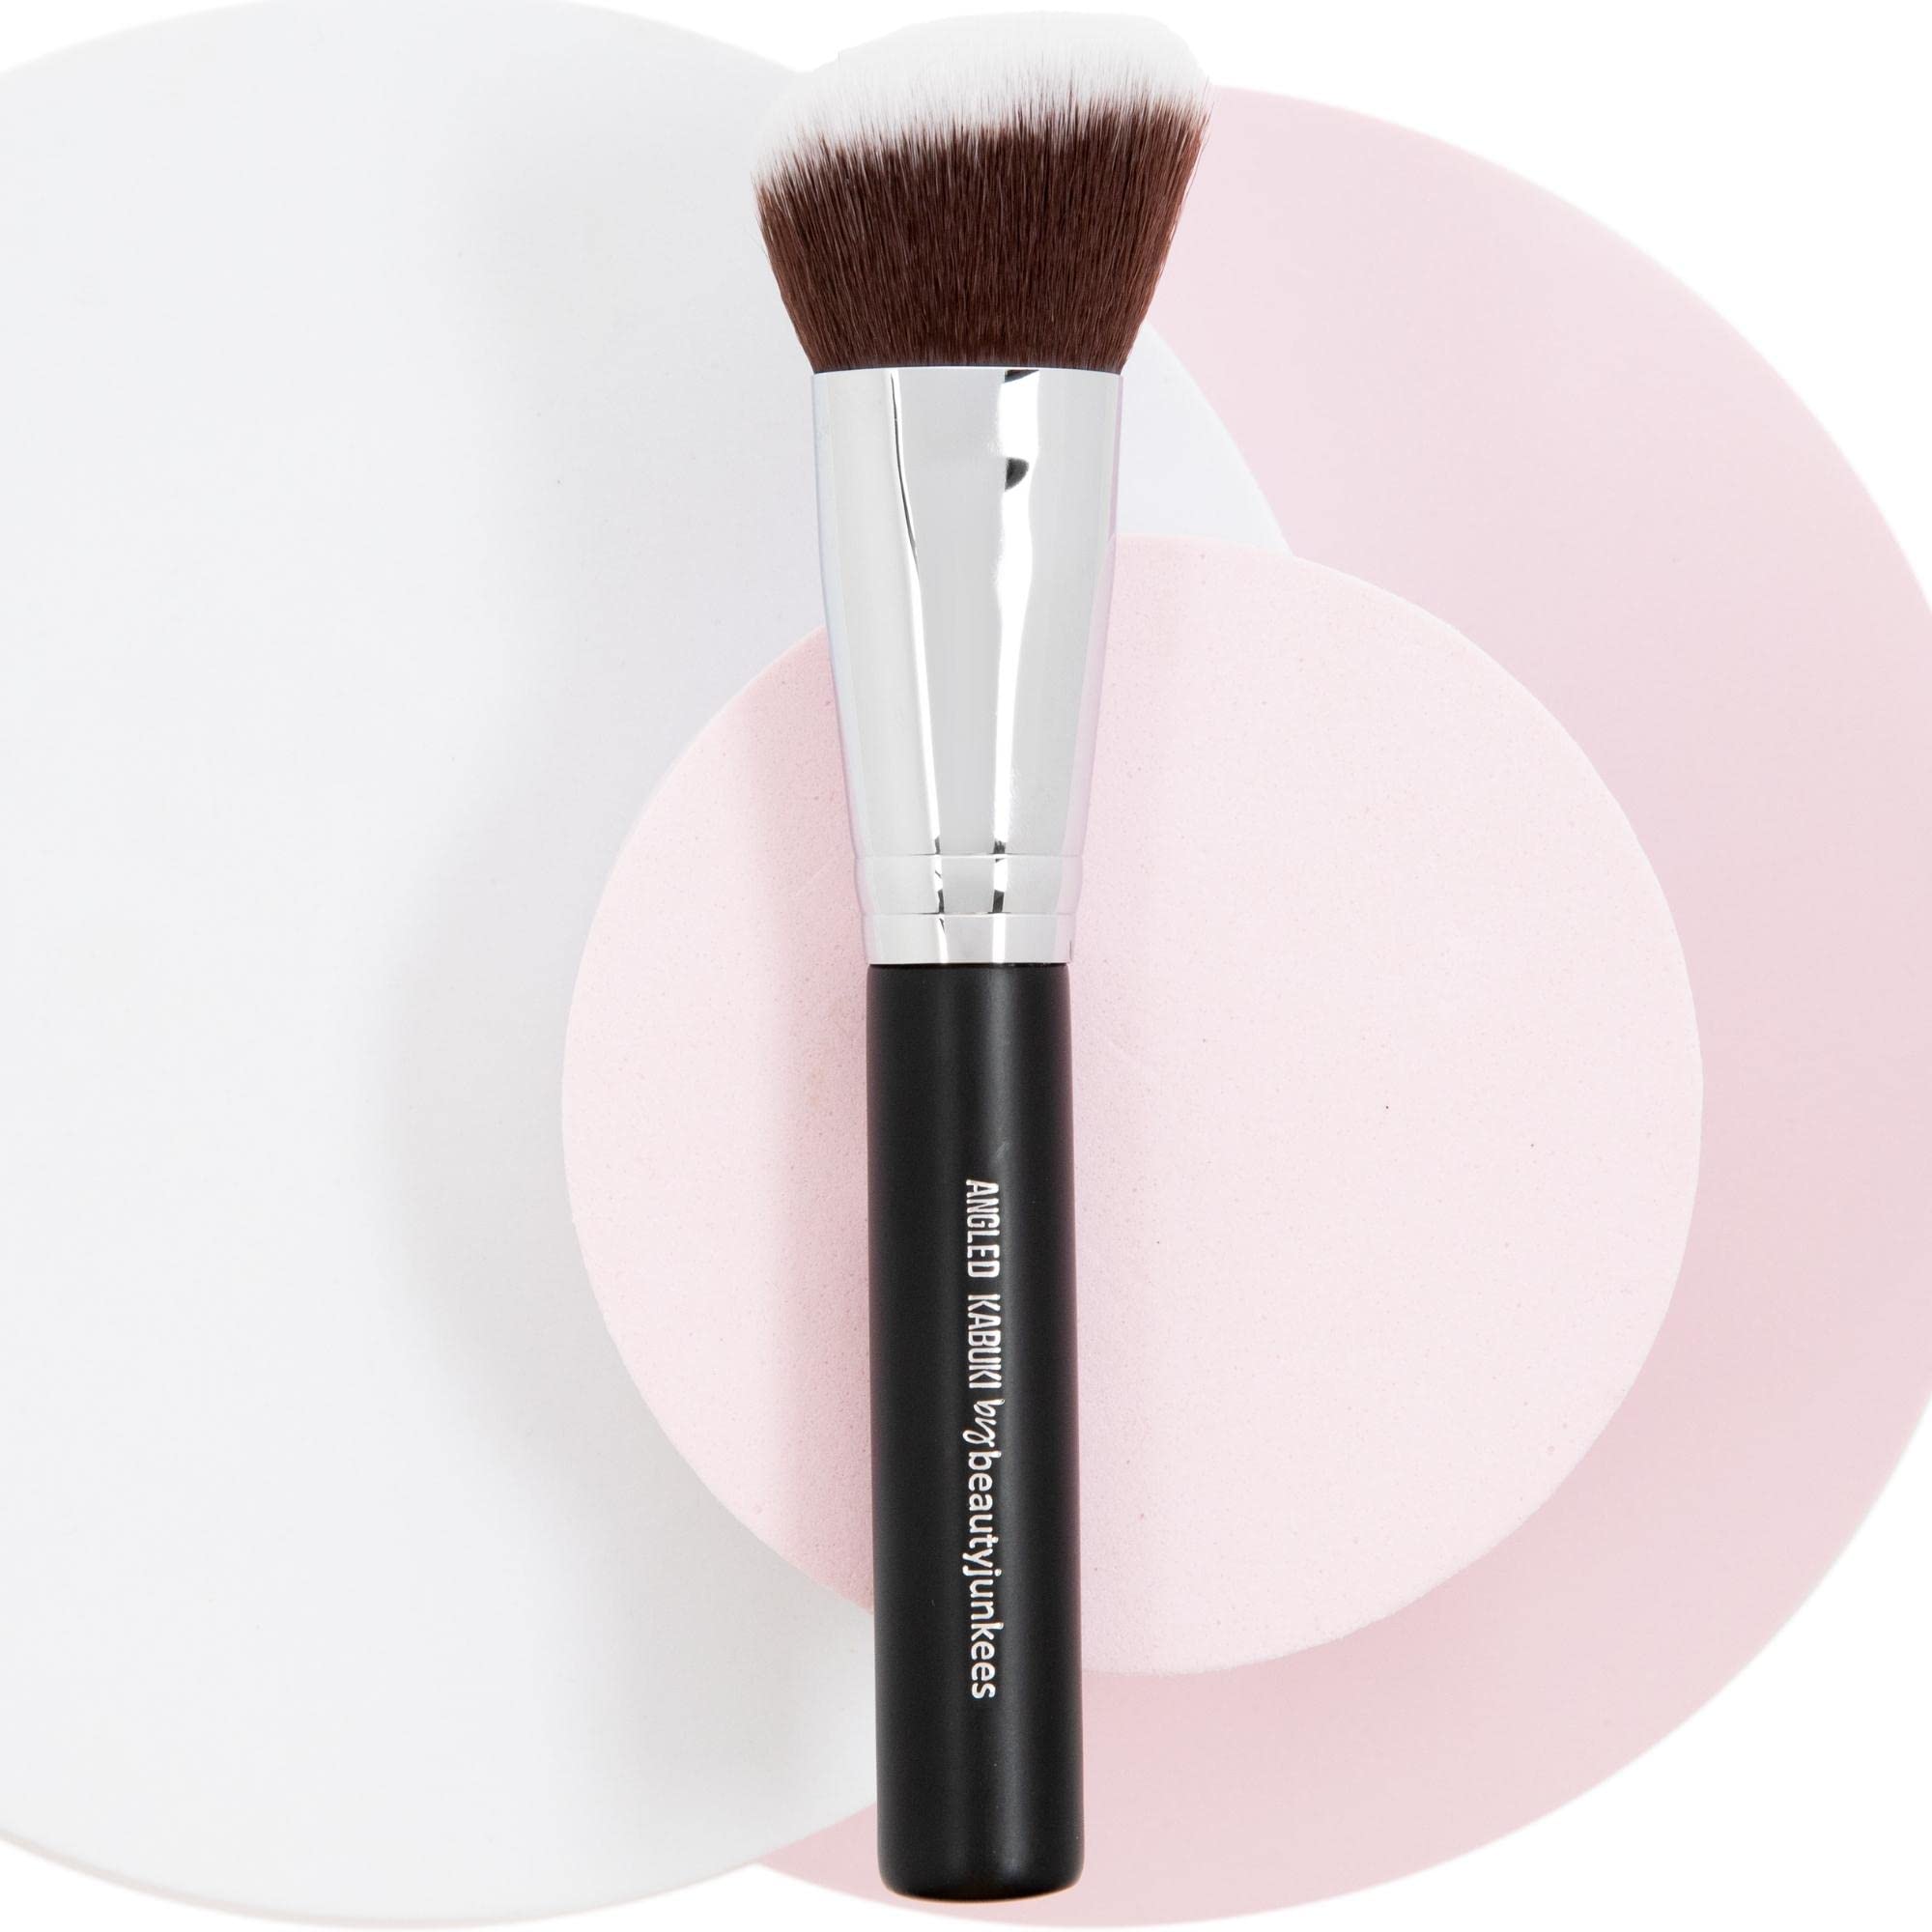 Angled Blush Brush for Makeup – Large Dense Kabuki Blush Brush to Apply Liquid, Cream, Mineral Powder Blush Bronzer Contour Brush by Beauty Junkees